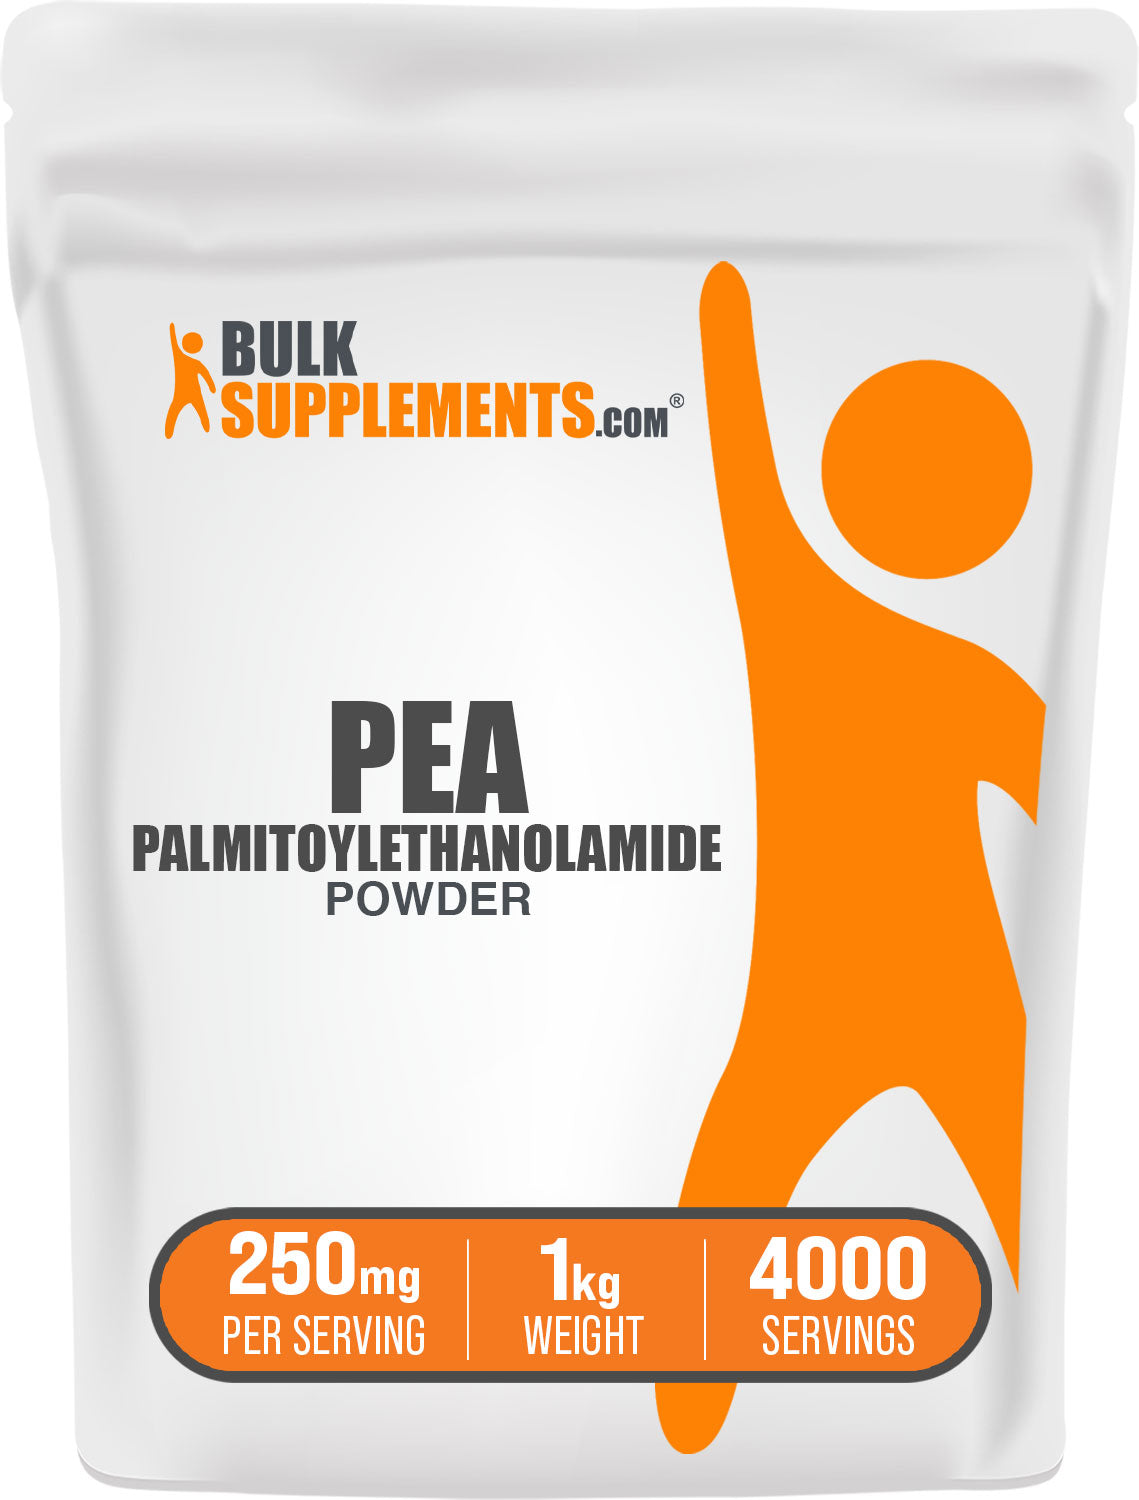 BulkSupplements.com Palmitoylethanolamide (PEA) Powder 1kg bag